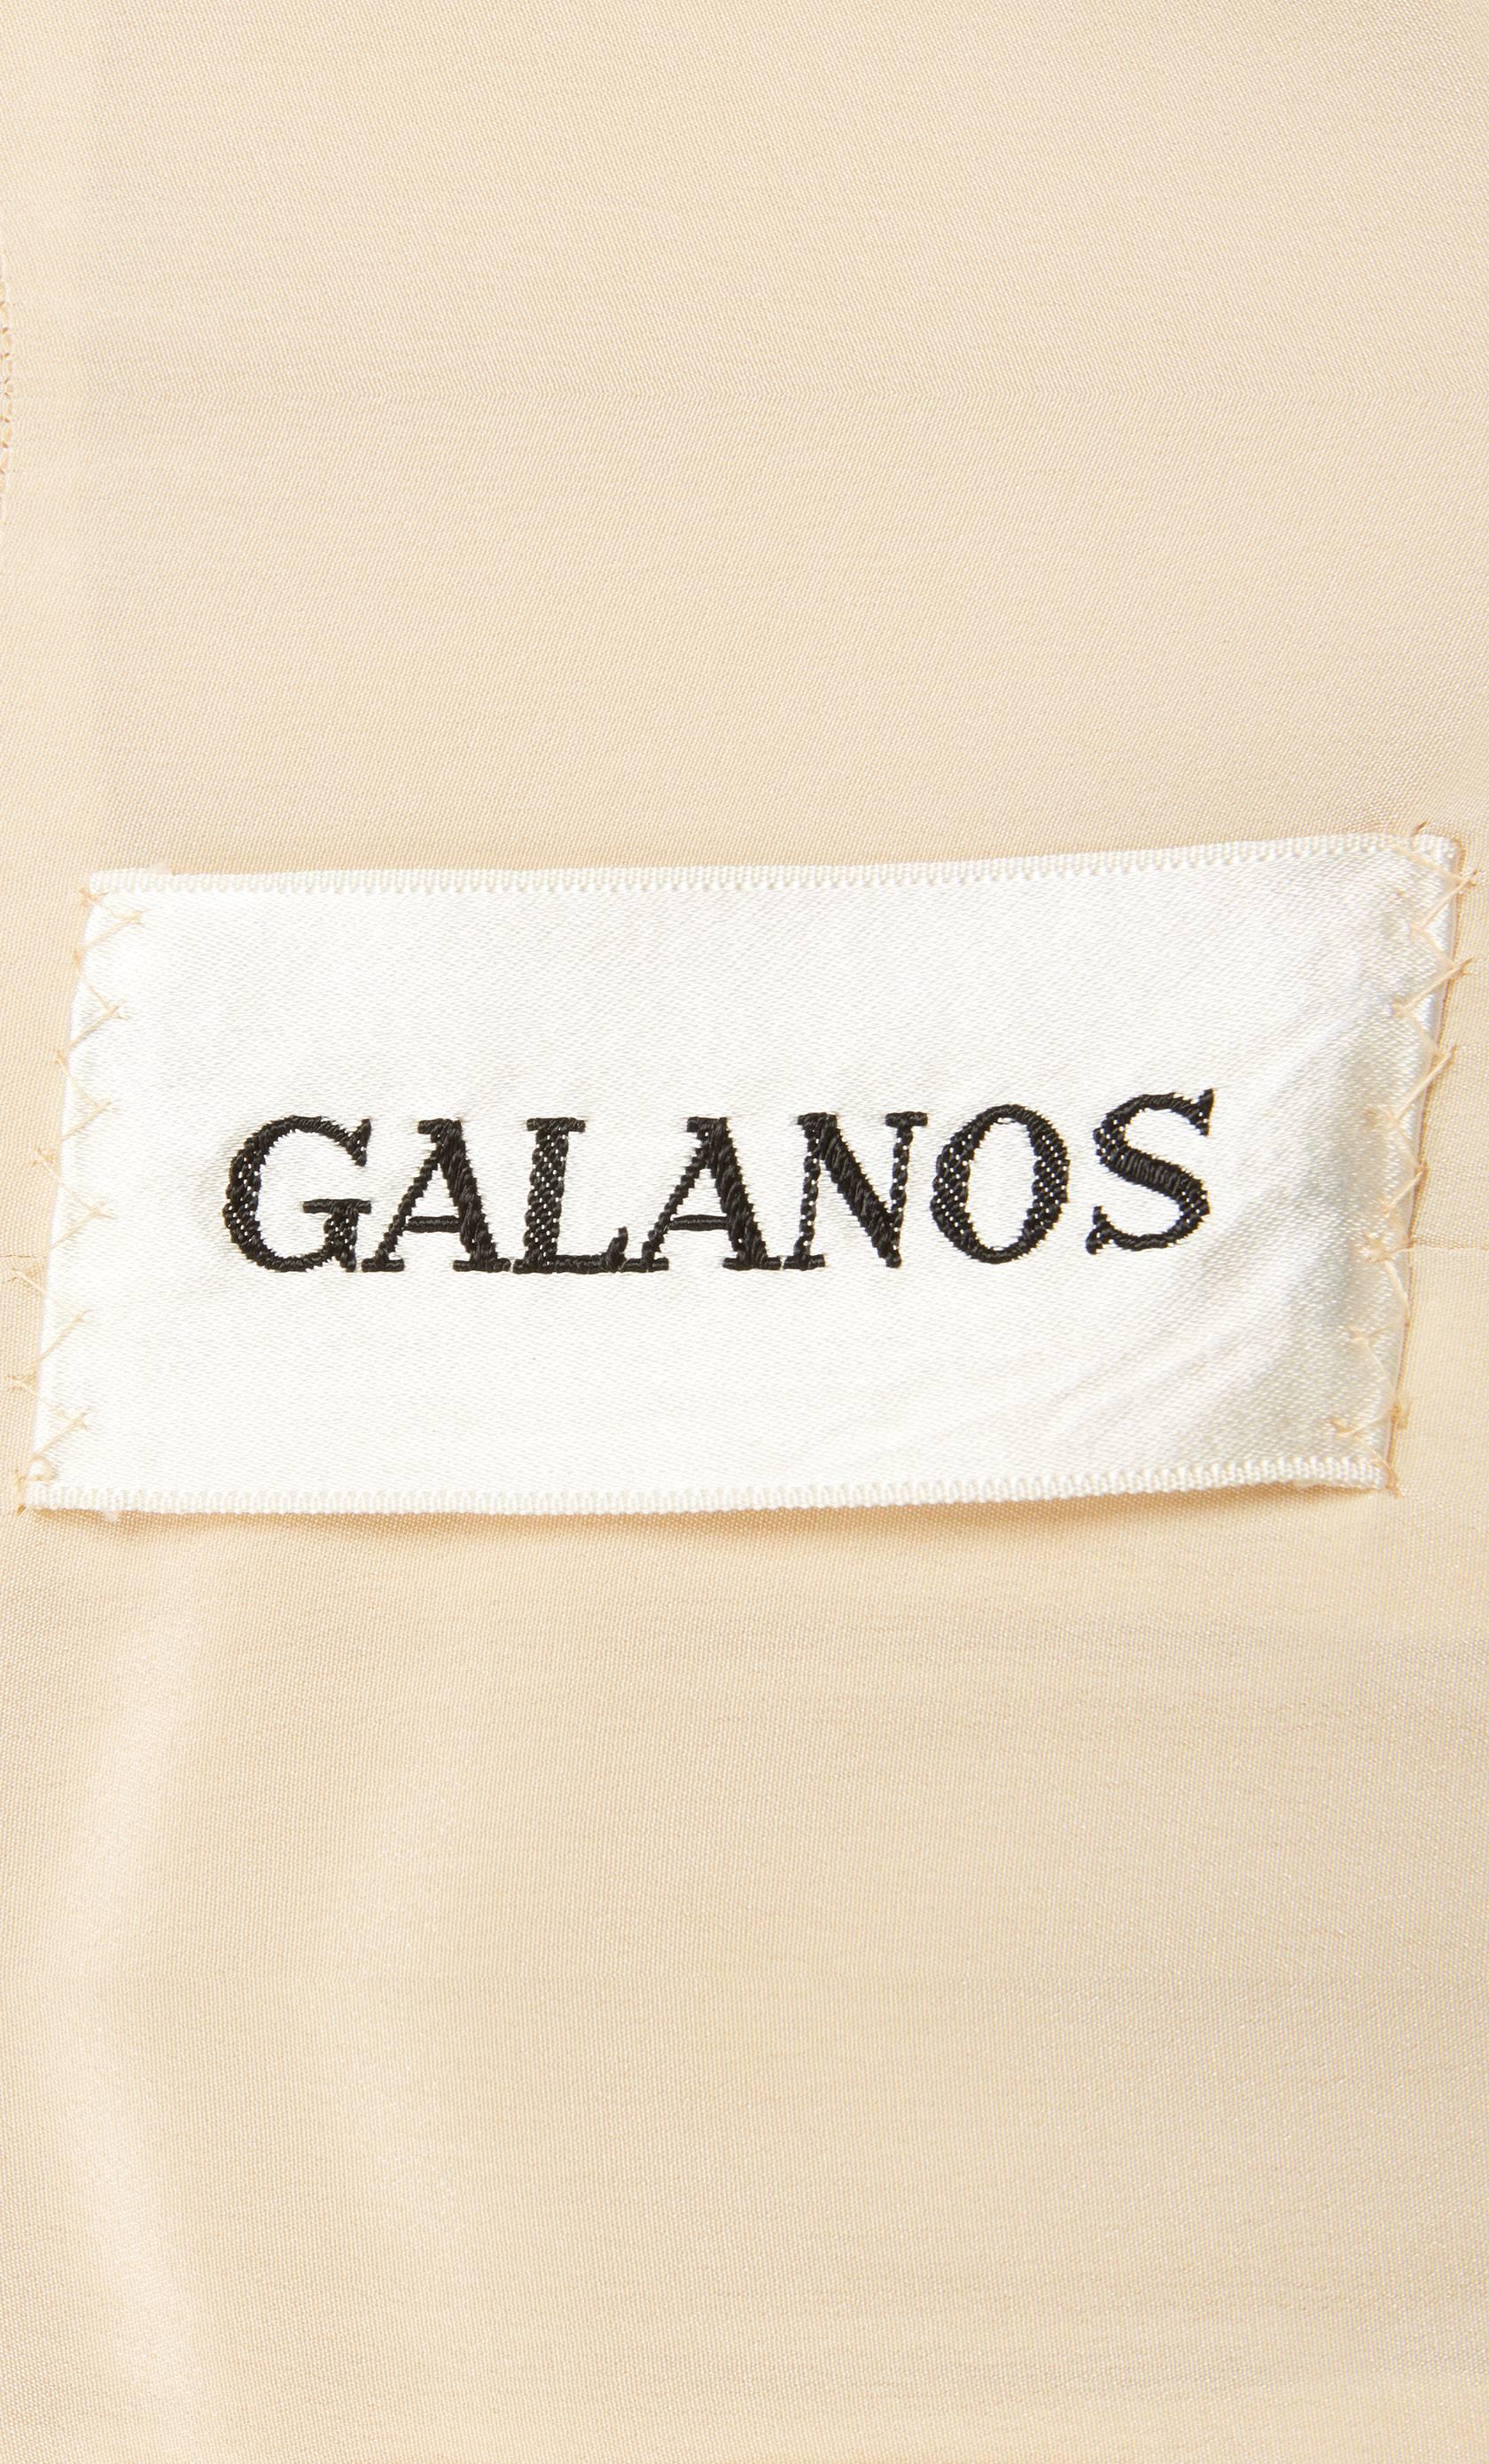 Women's Galanos ivory coat dress, circa 1968